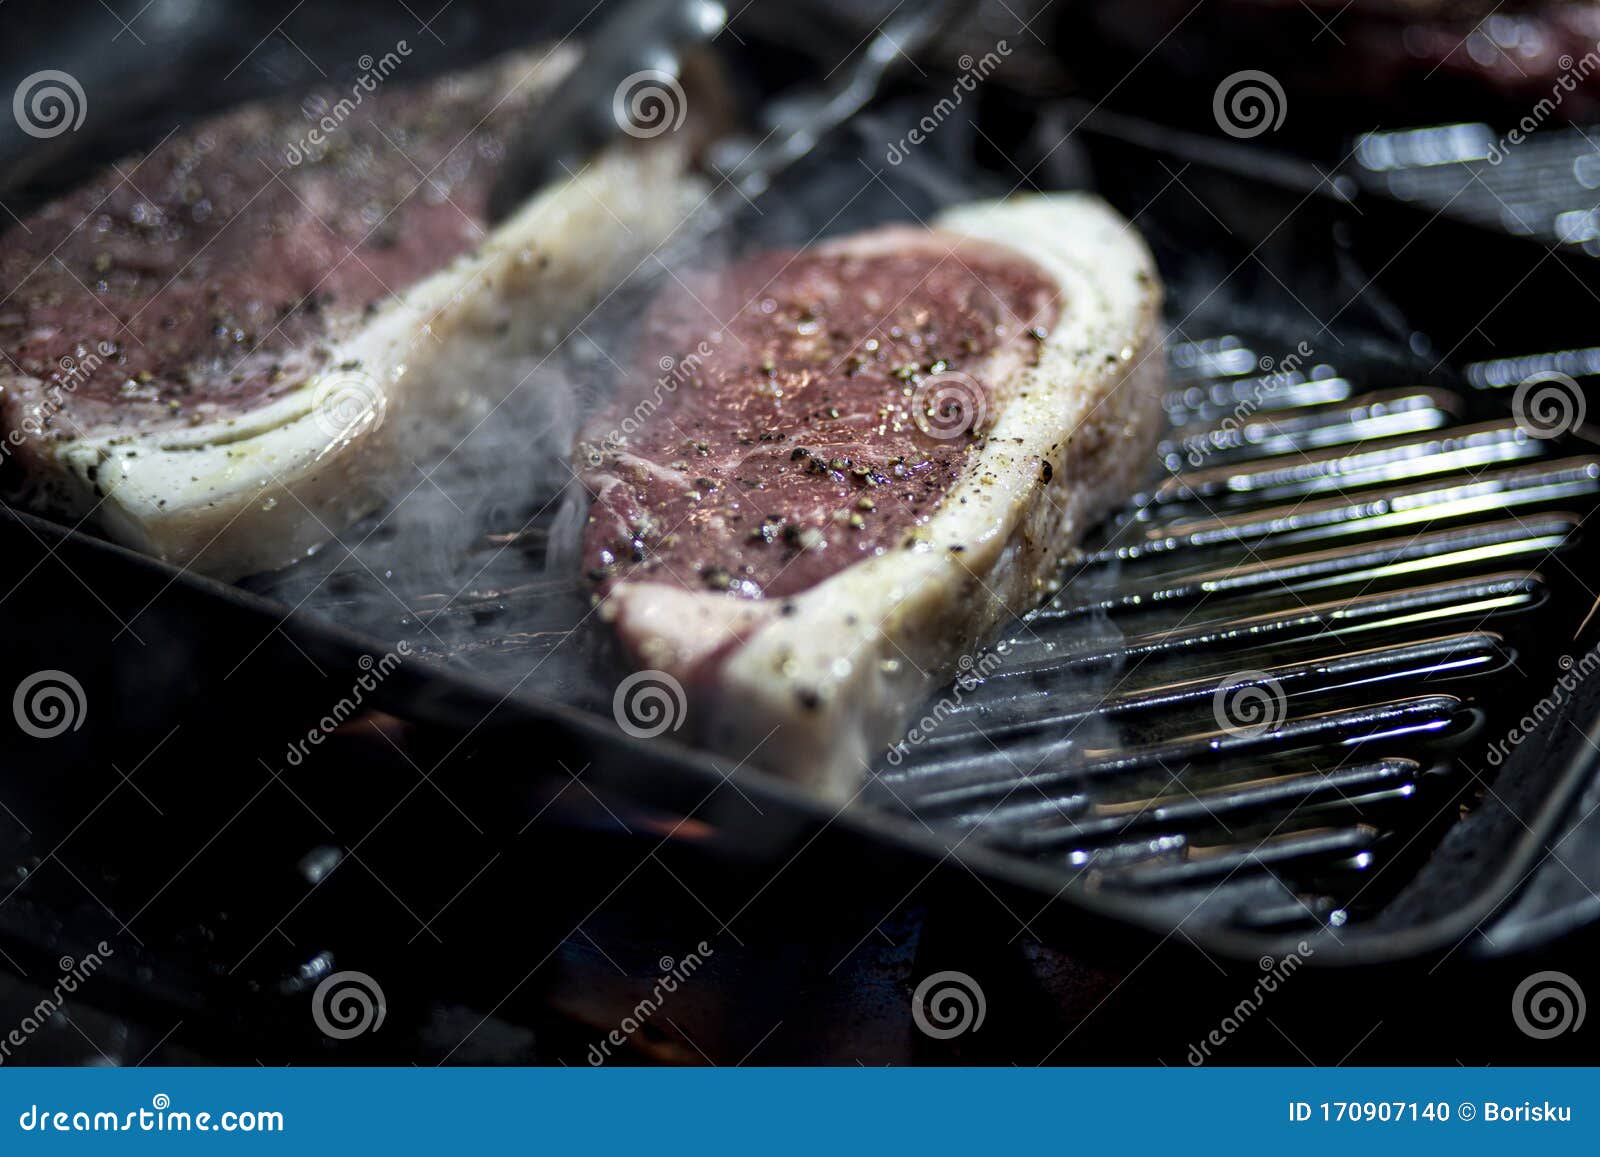 red meat preparetion